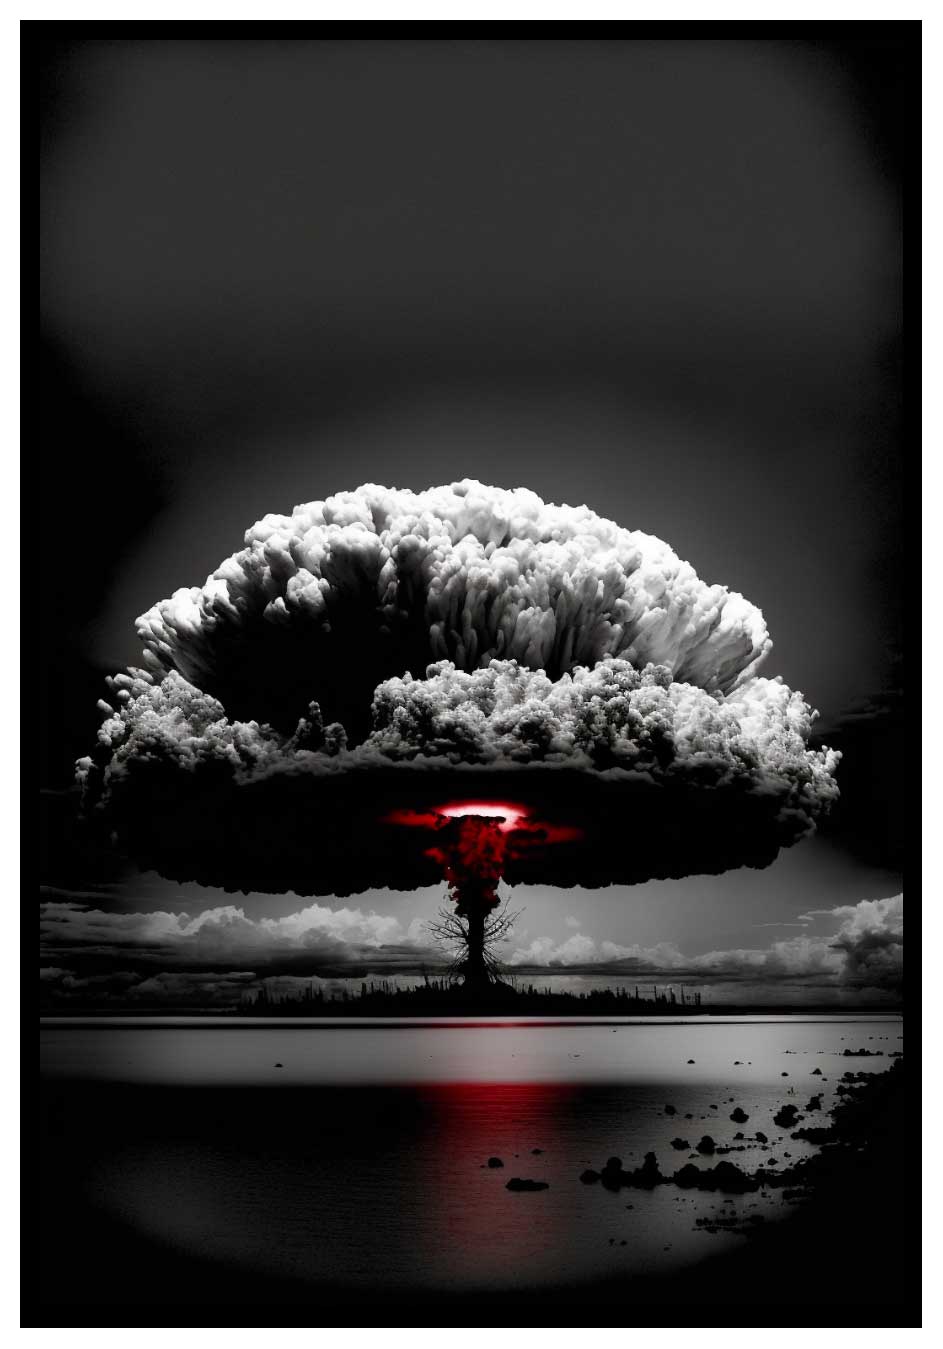 One Final Bomb Doomsday Mushroom Cloud Poster 4978